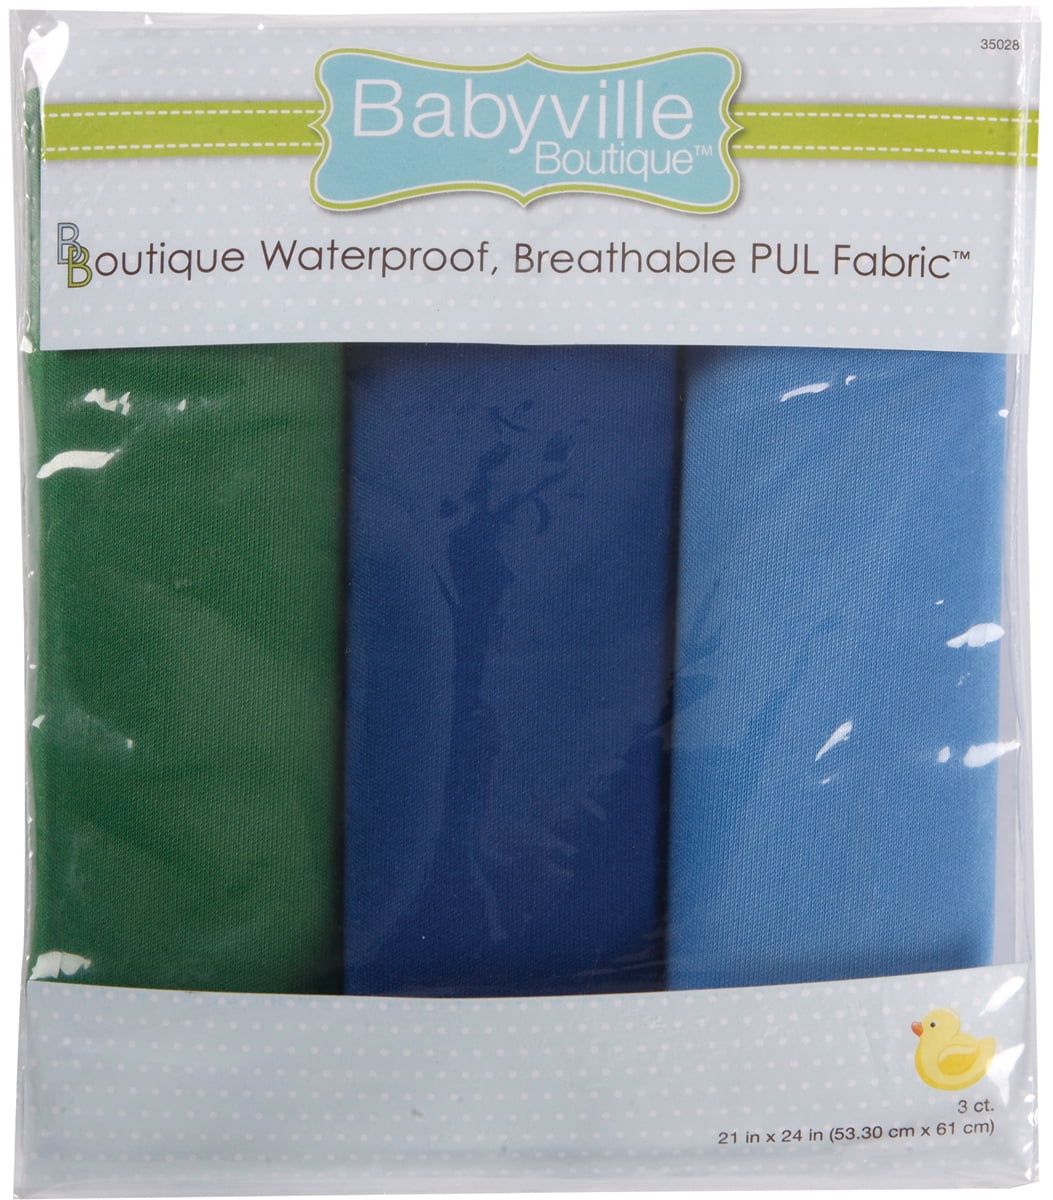 Babyville Pul Waterproof Diaper Fabric